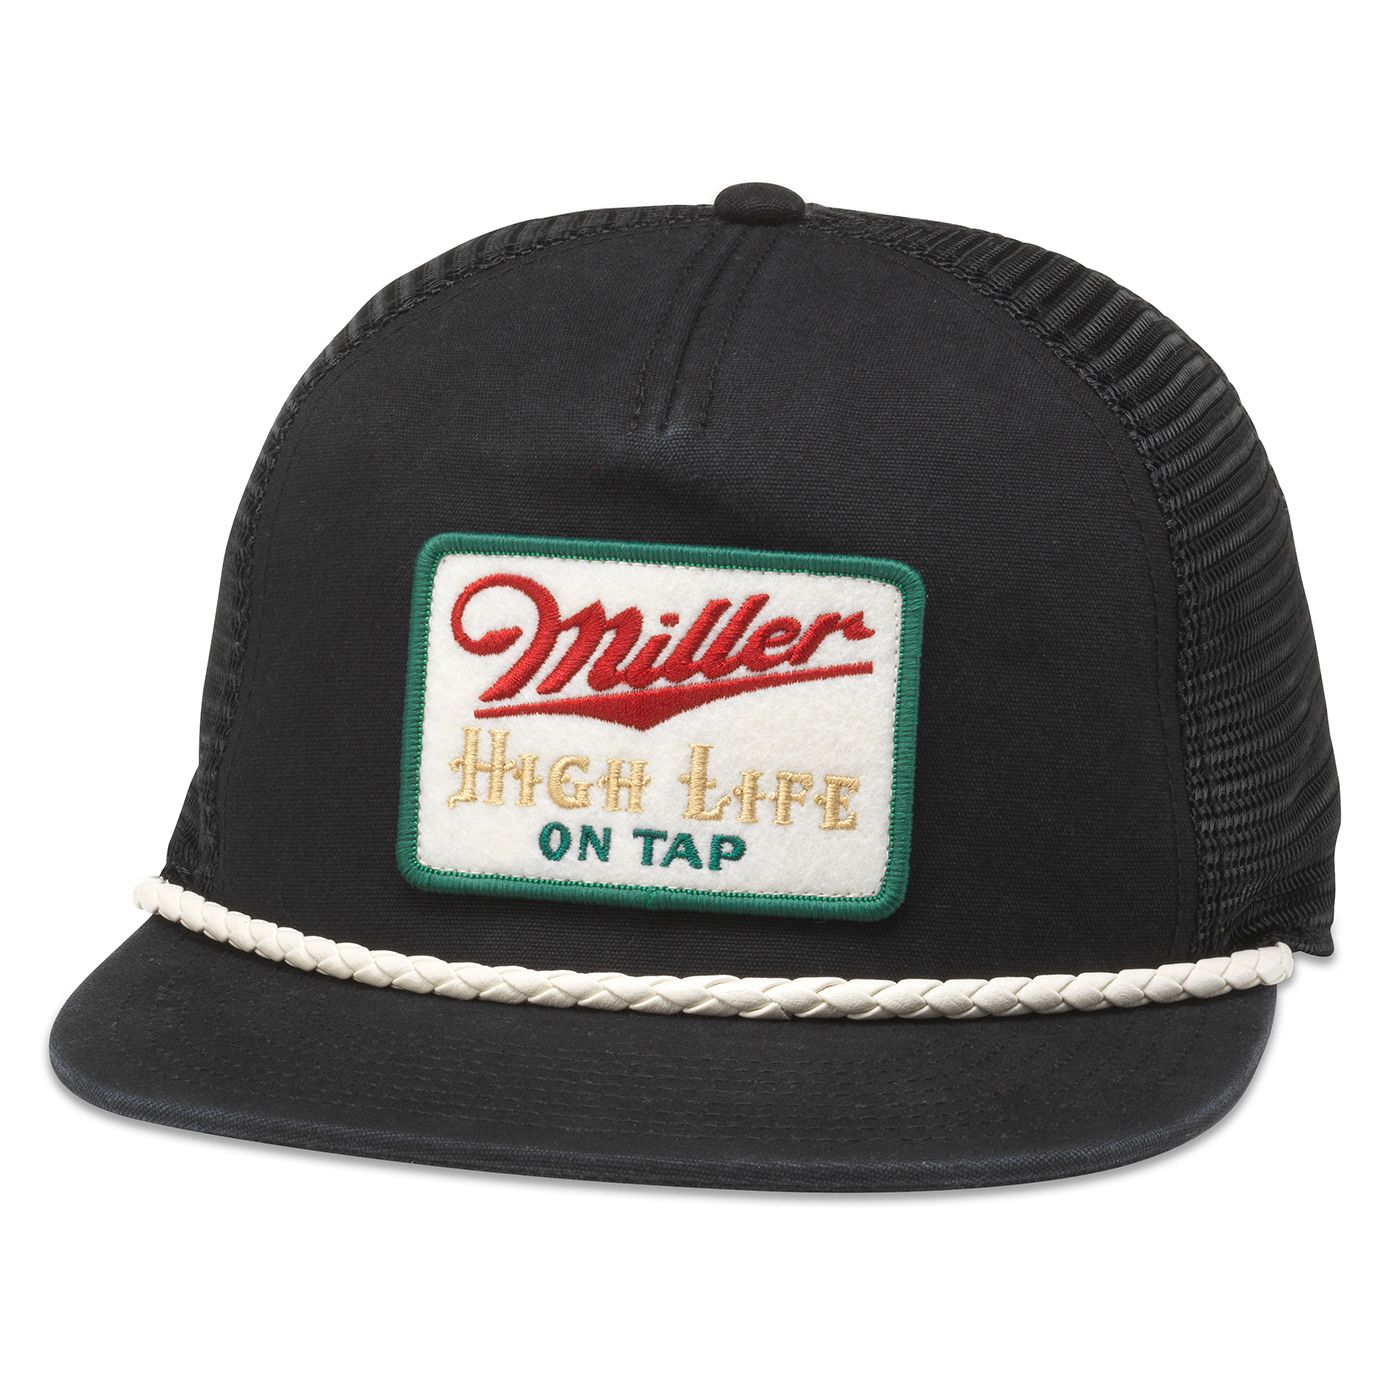 Wyatt Miller High Life Hat